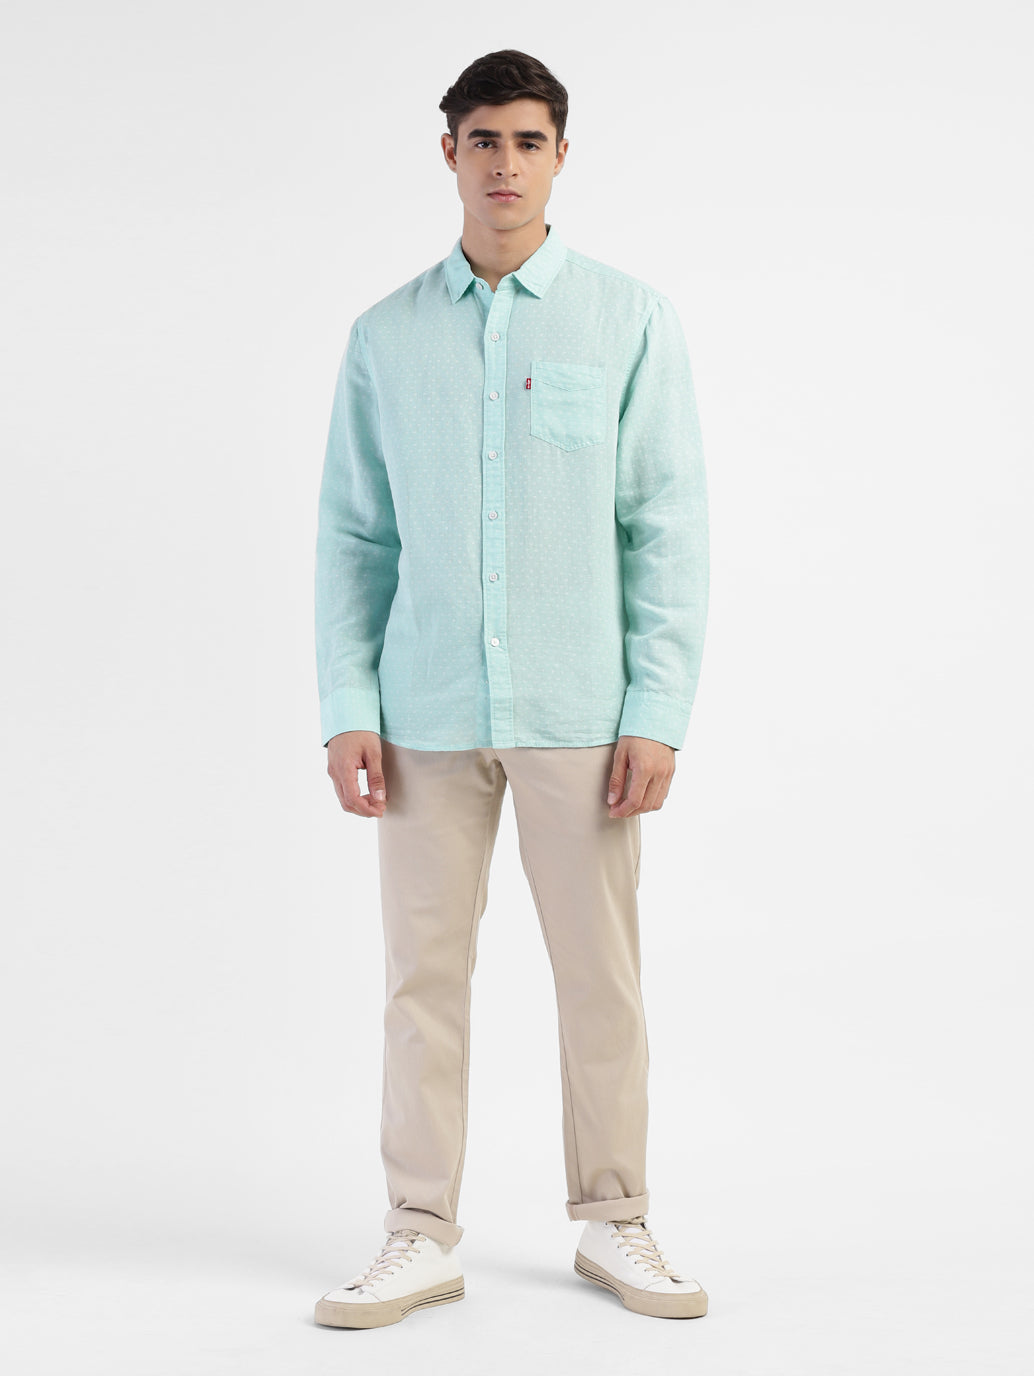 Men's Polka Dot Spread Collar Linen Shirt